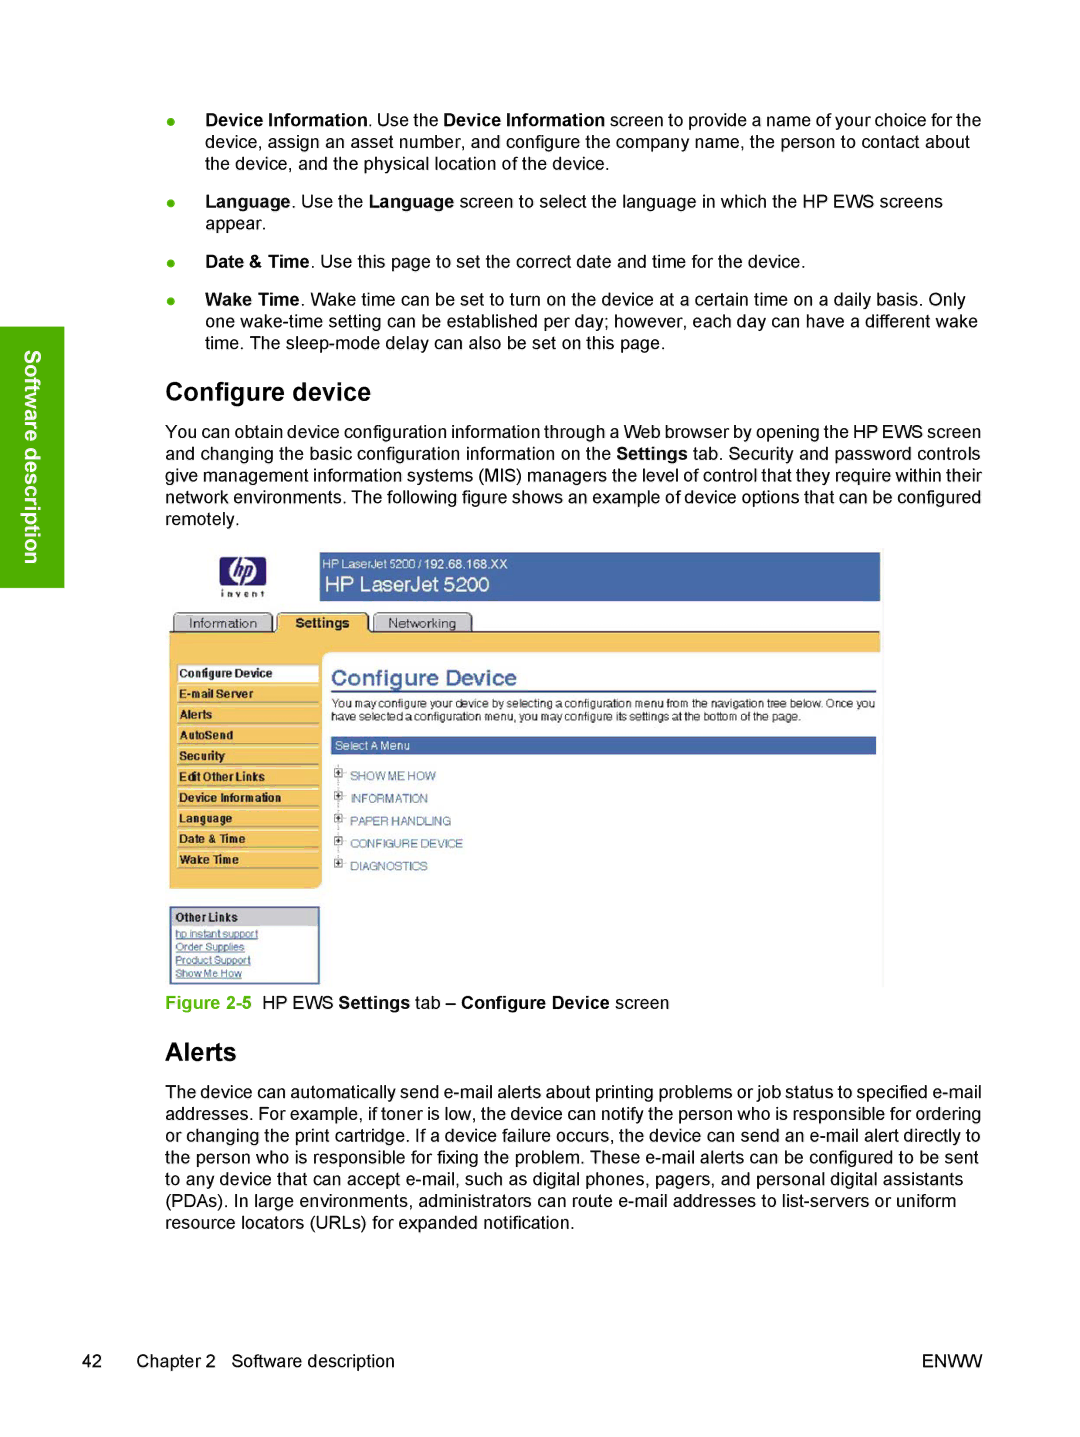 HP 5200L manual Configure device, Alerts 